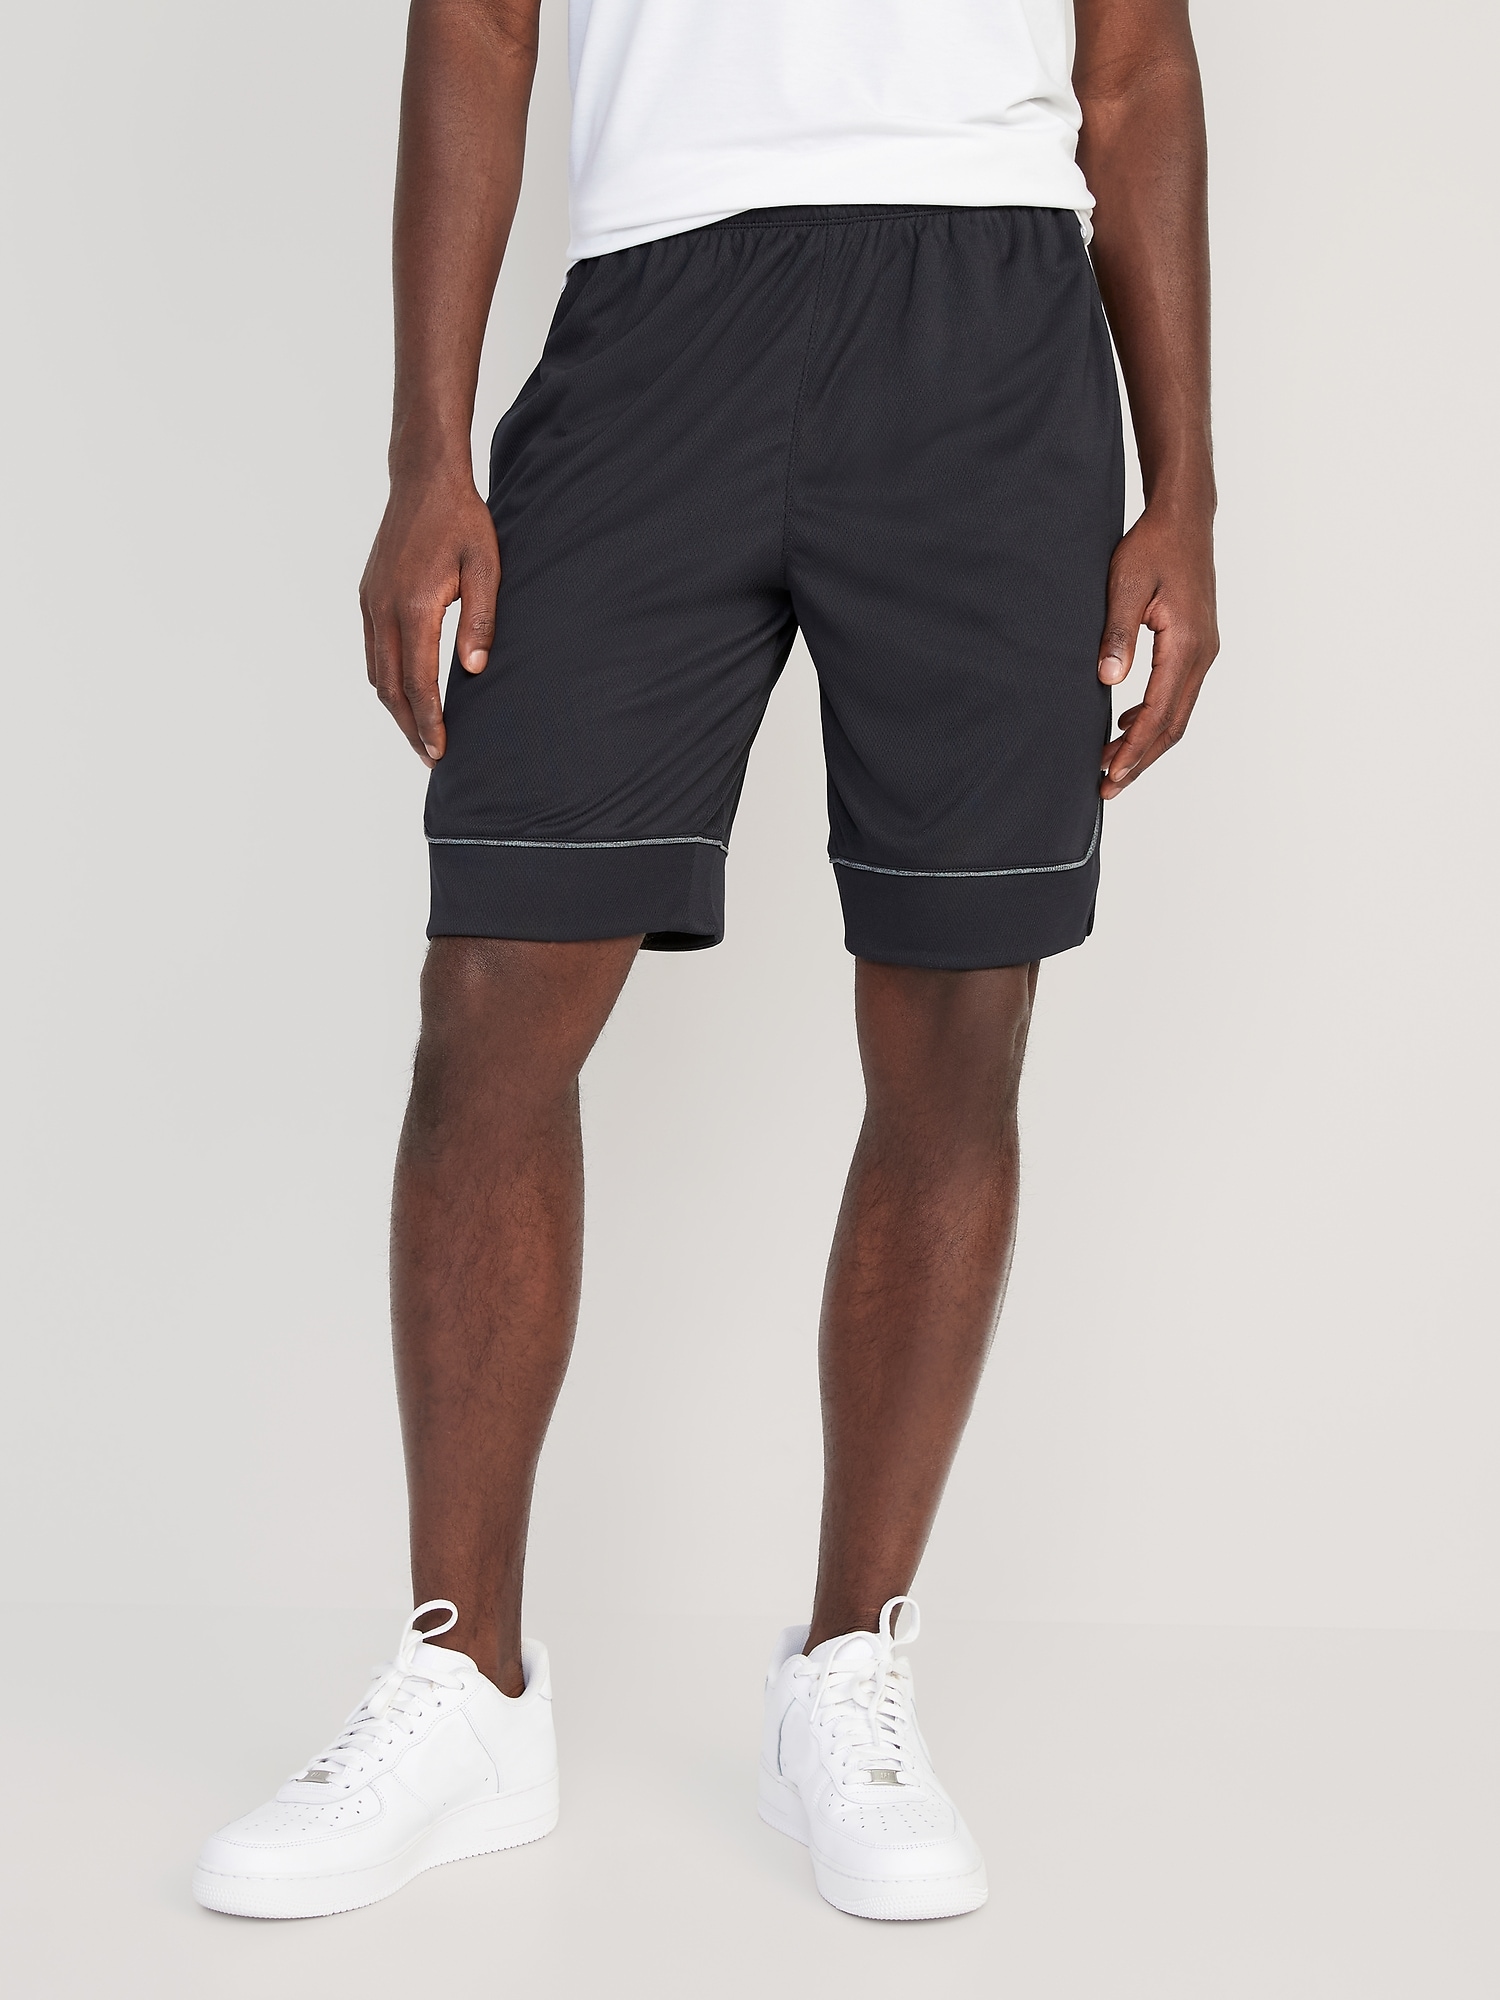 Old Navy Mesh Basketball Shorts -- 10-inch inseam black. 1